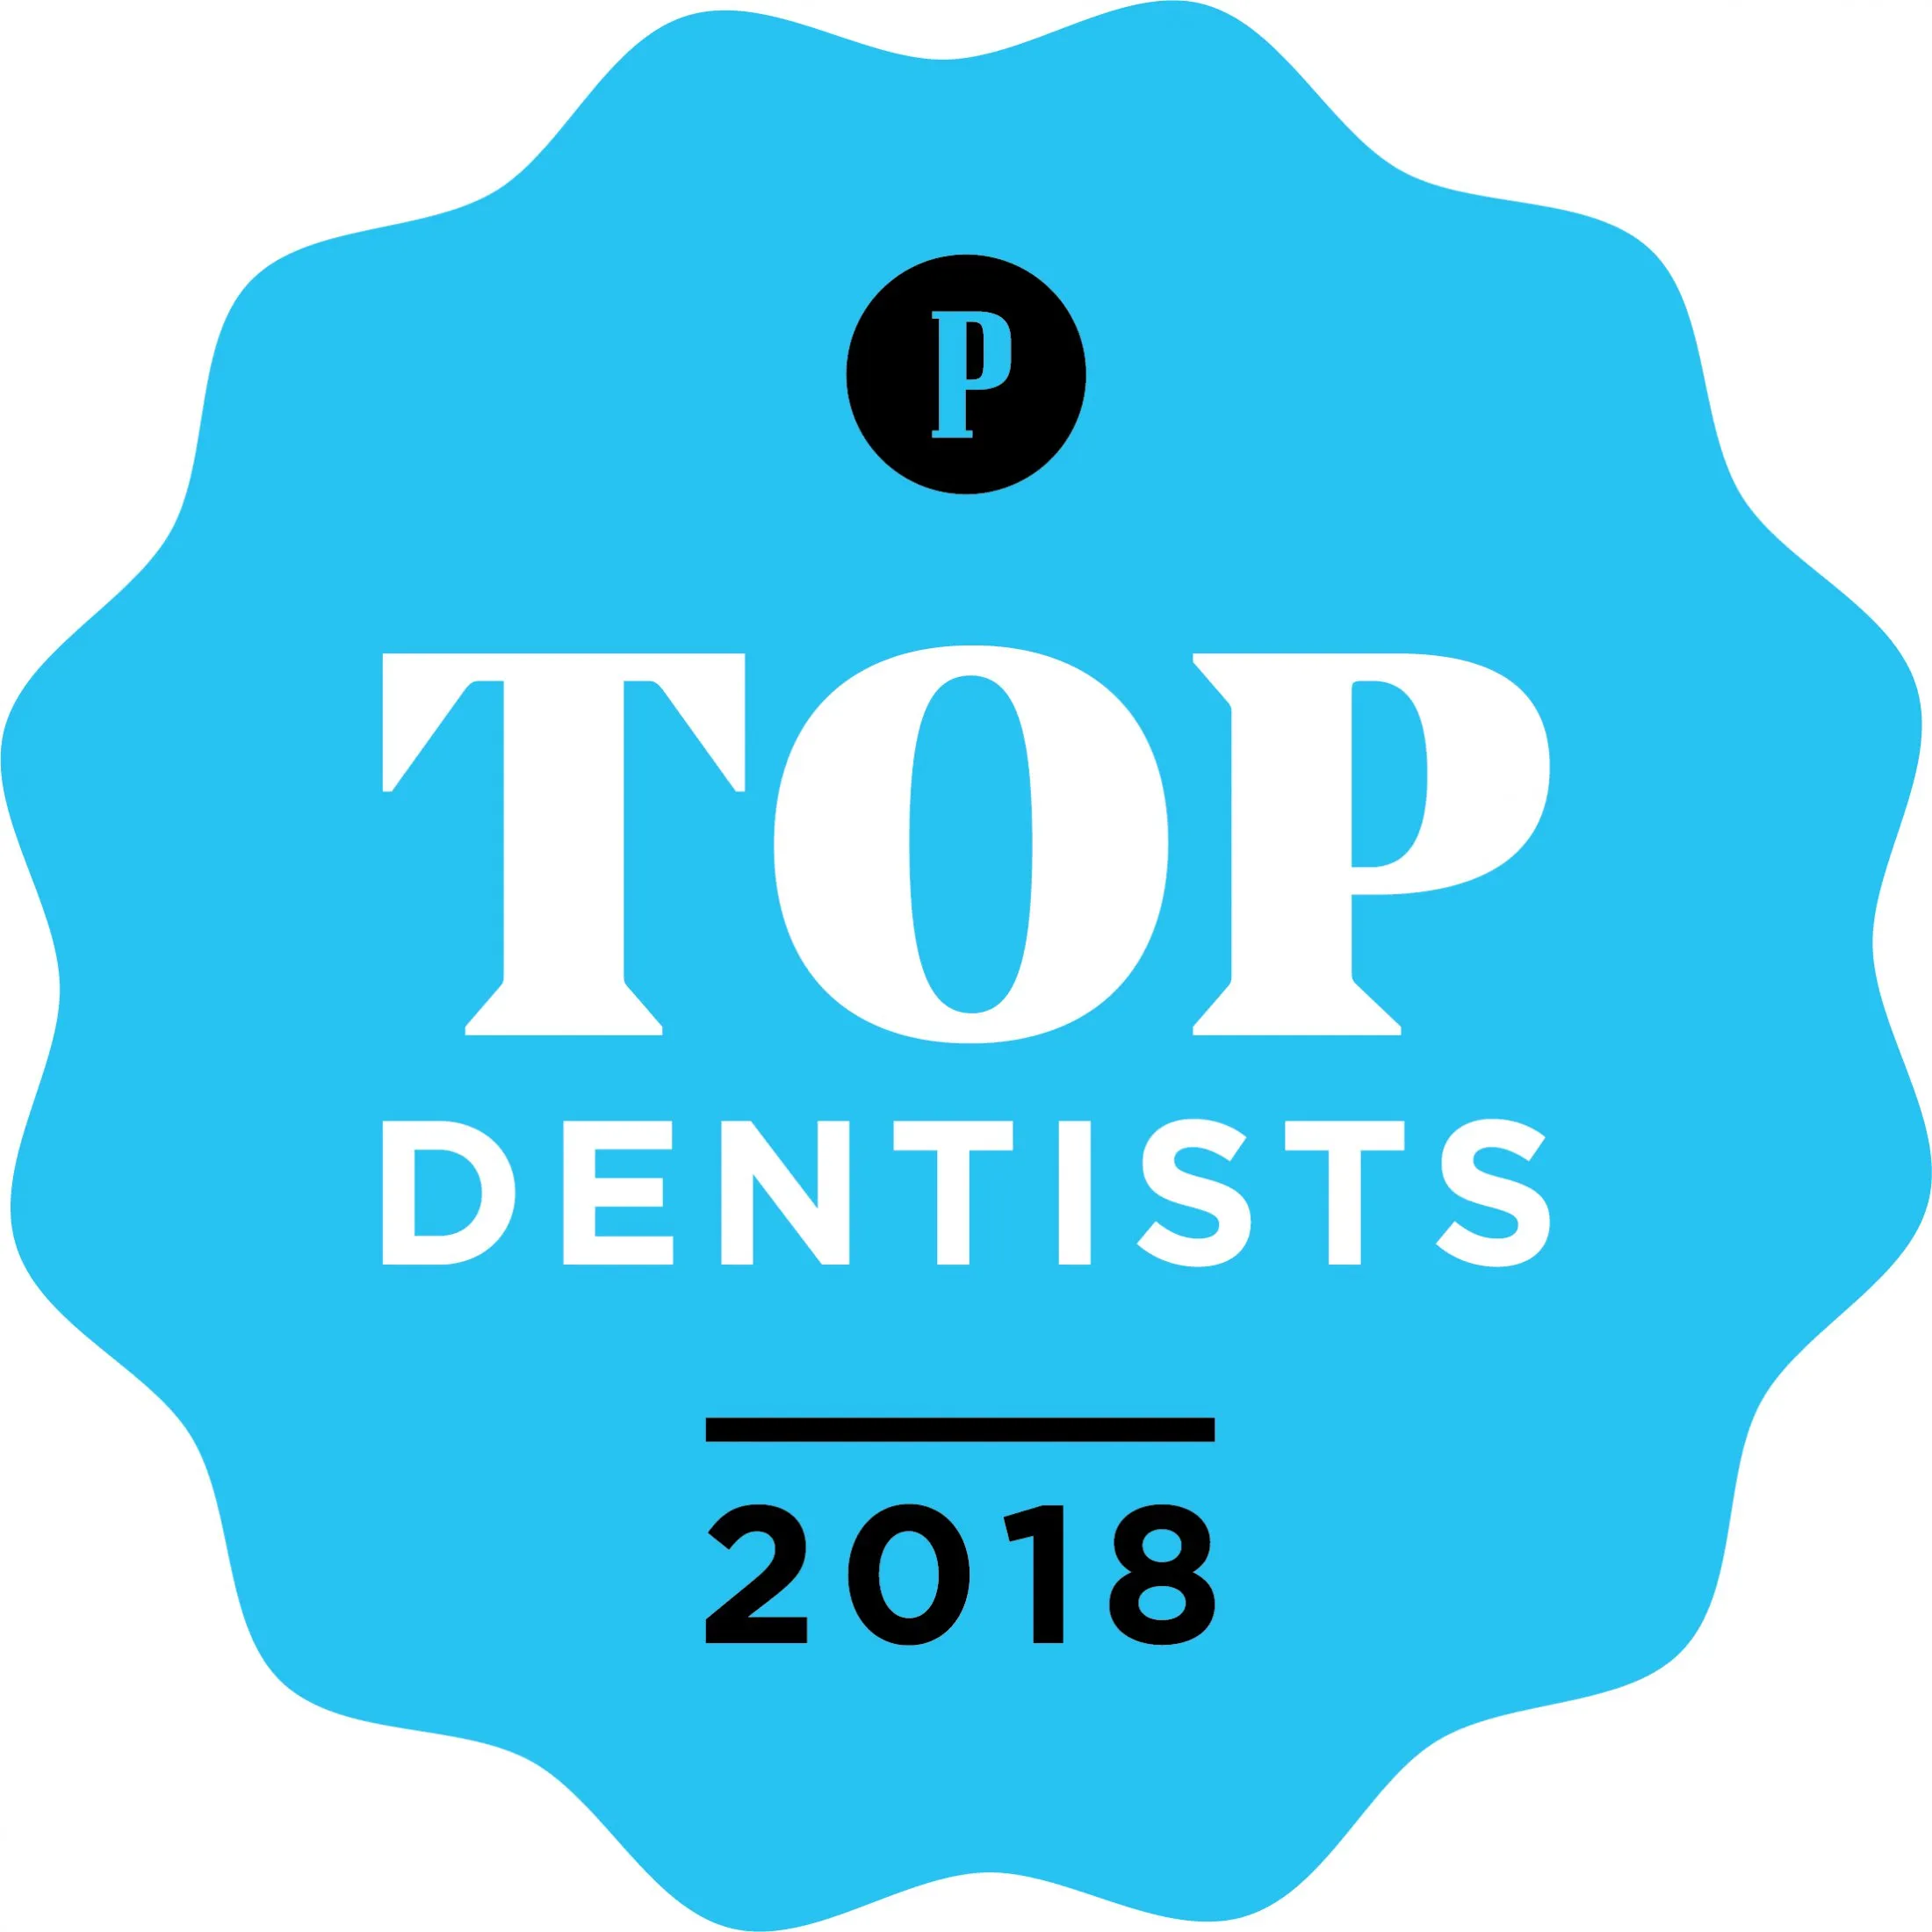 Logo for top dentists 2018 chosen by Philadelphia magazine